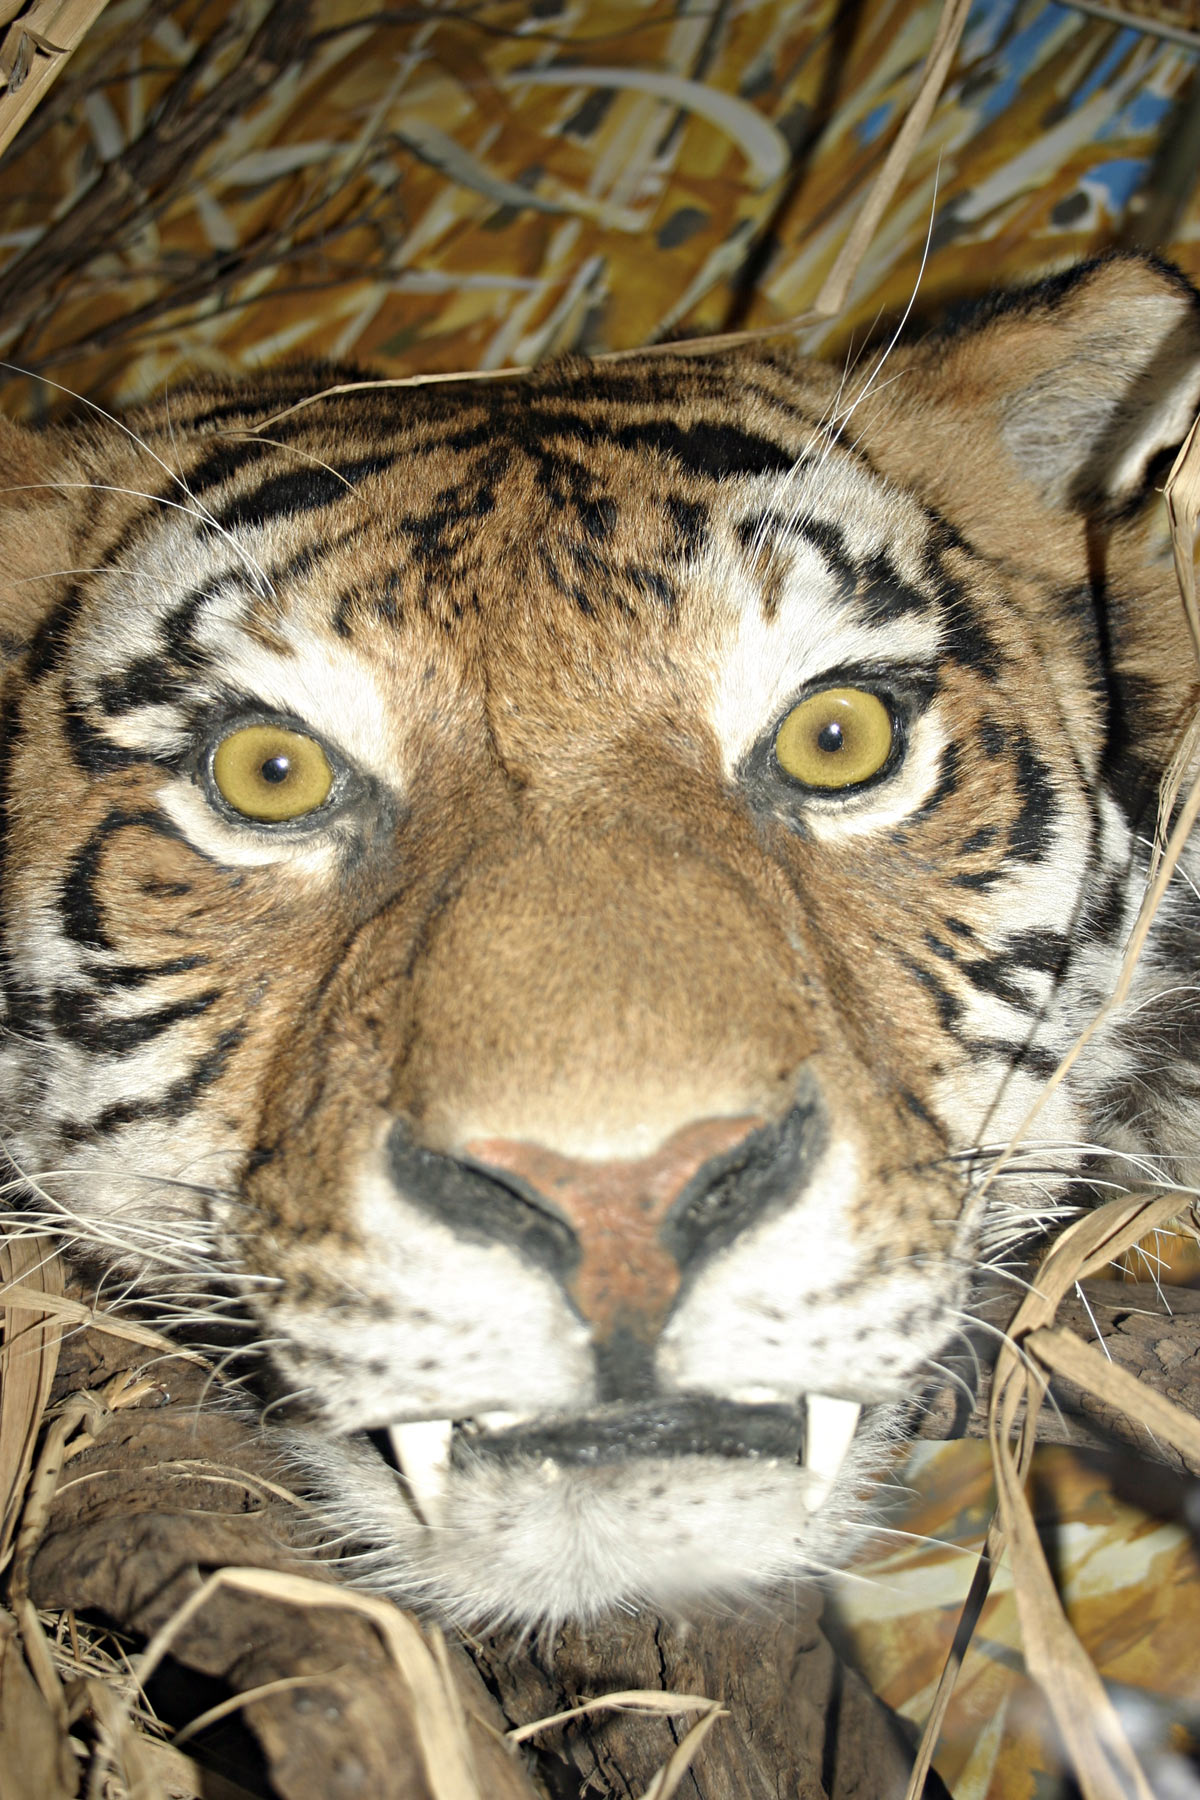 Stuffed tiger photo